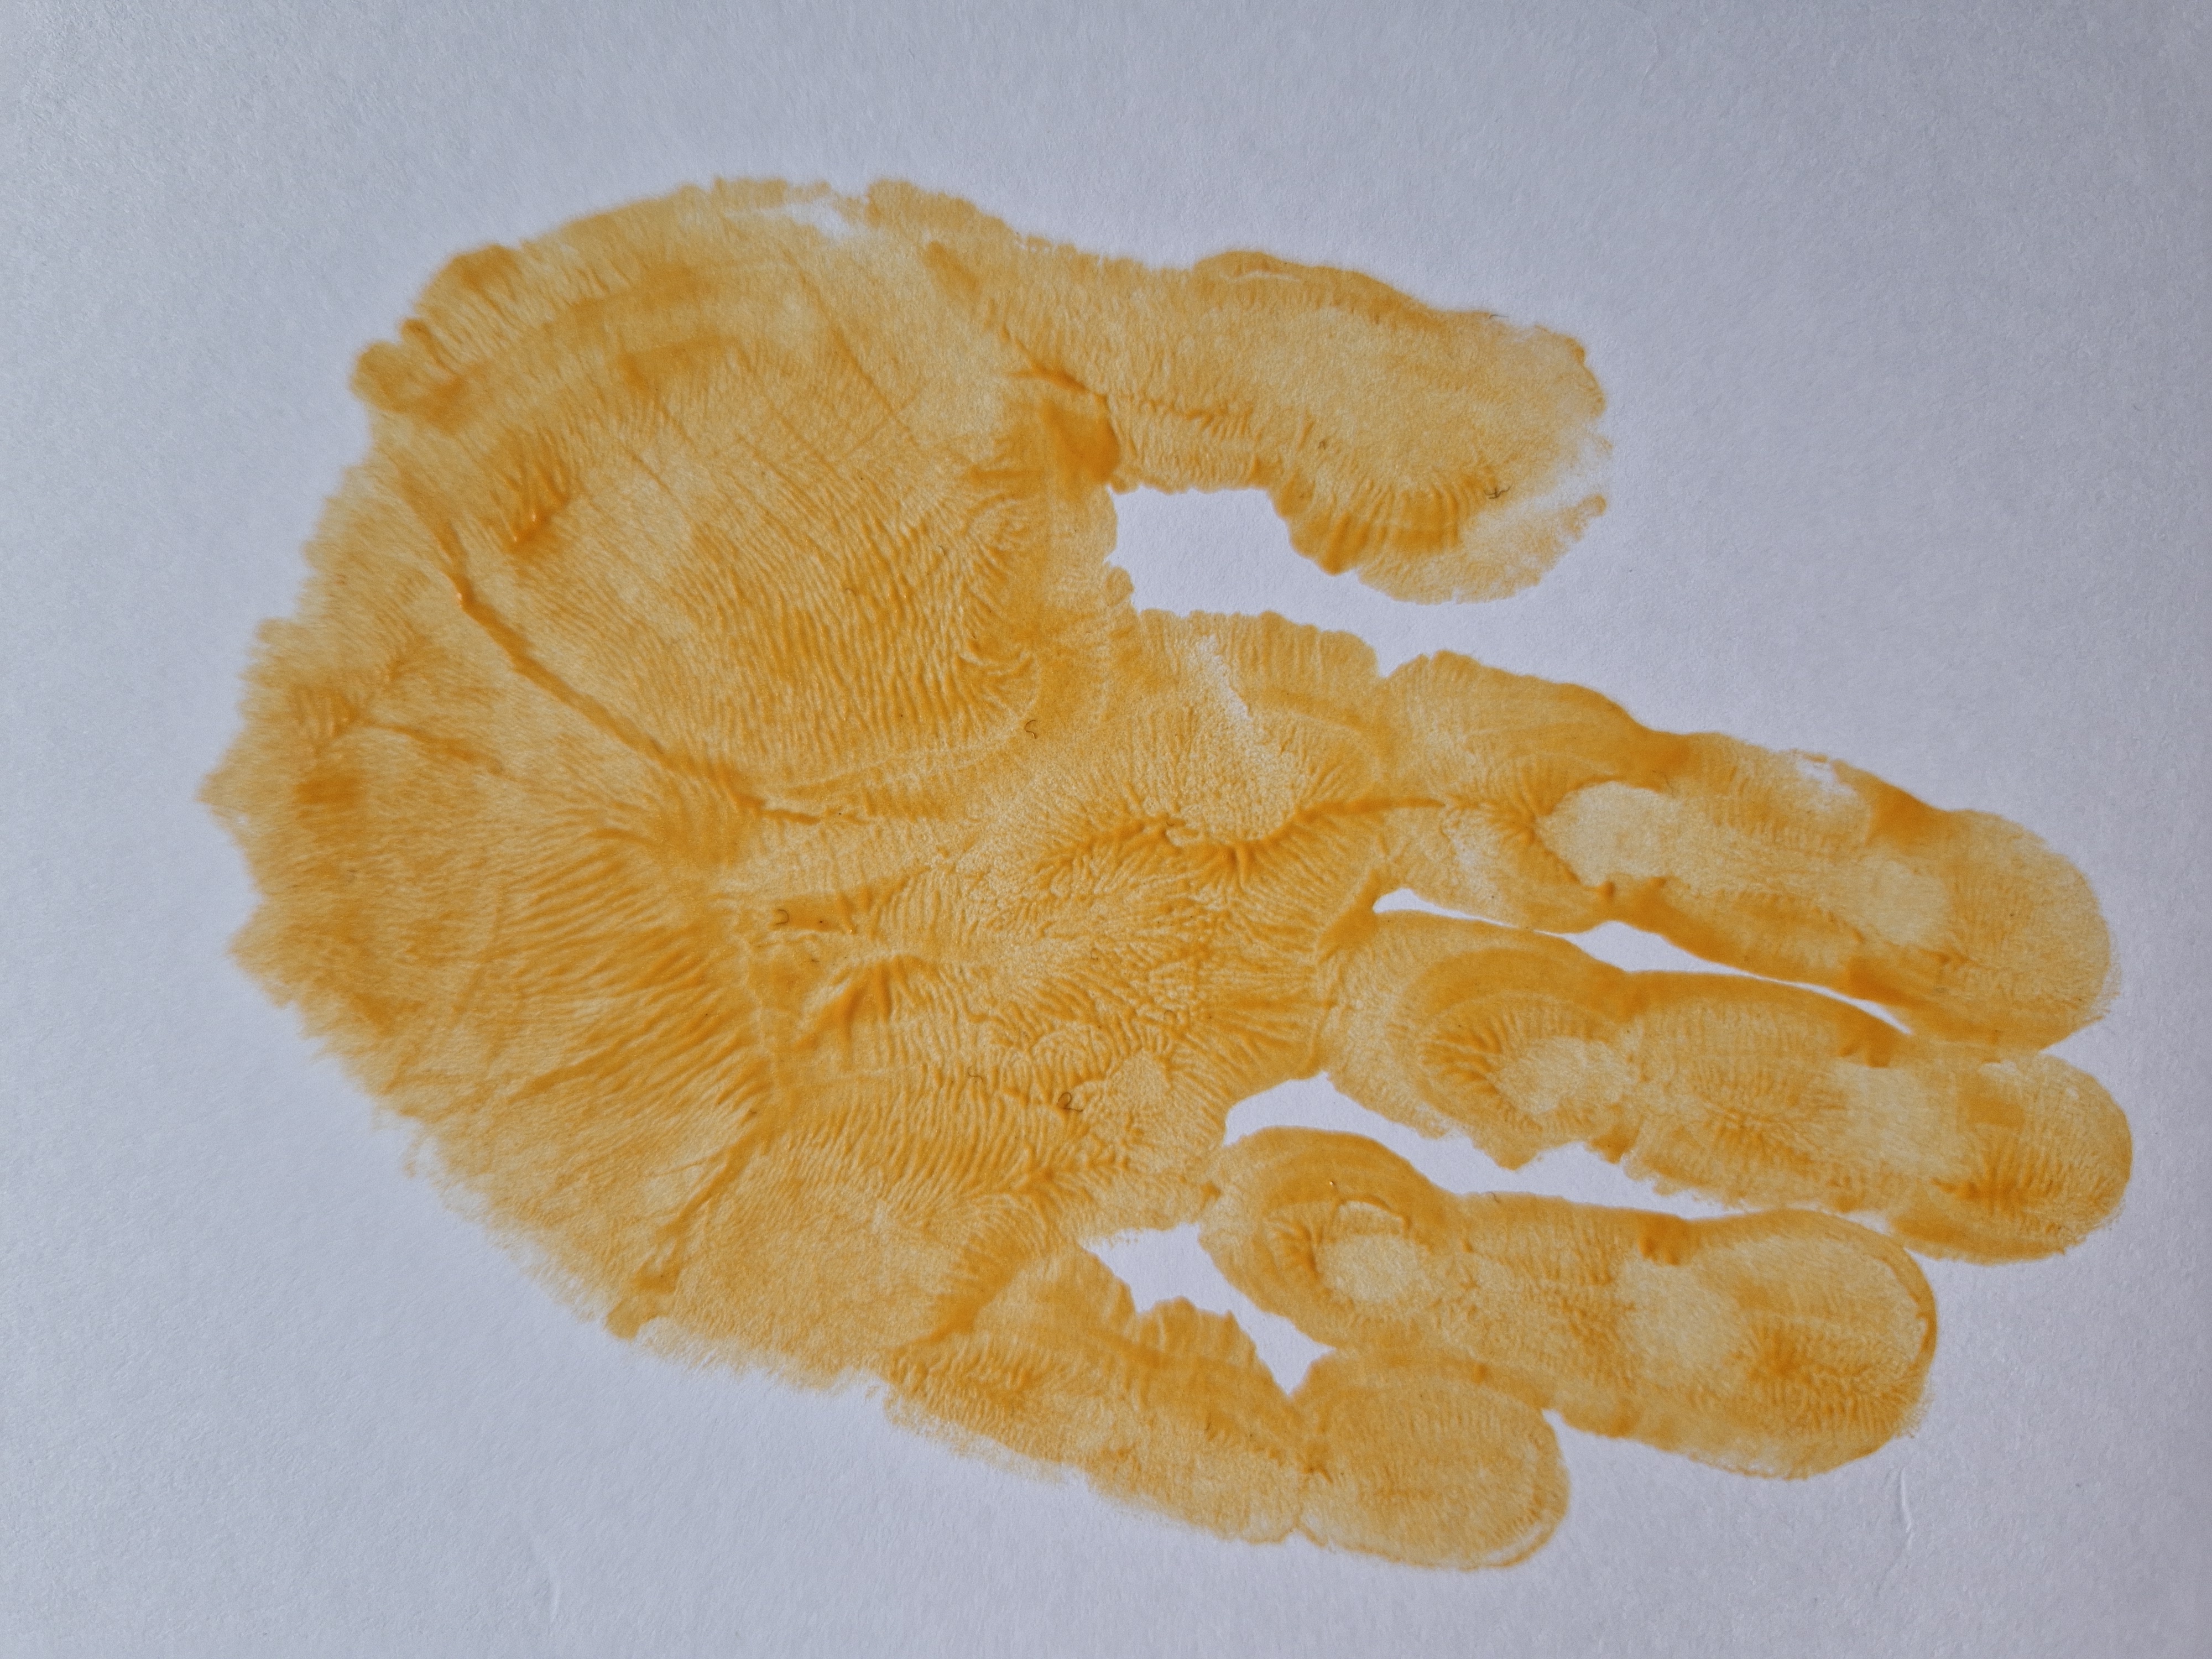 painted handprint